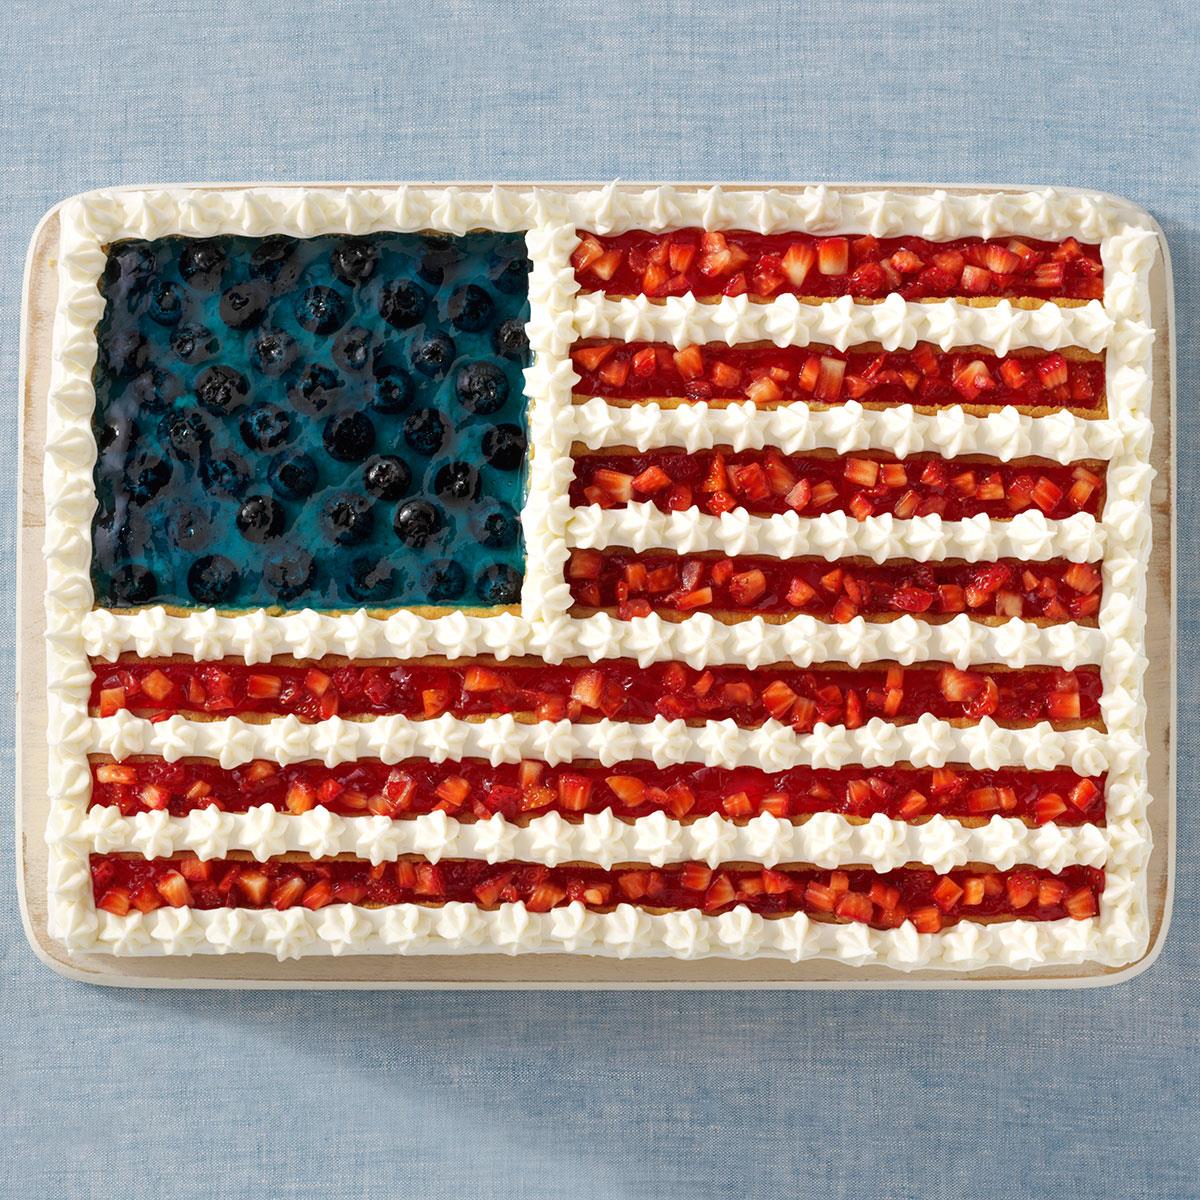 Flag Cake Recipe: How to Make It